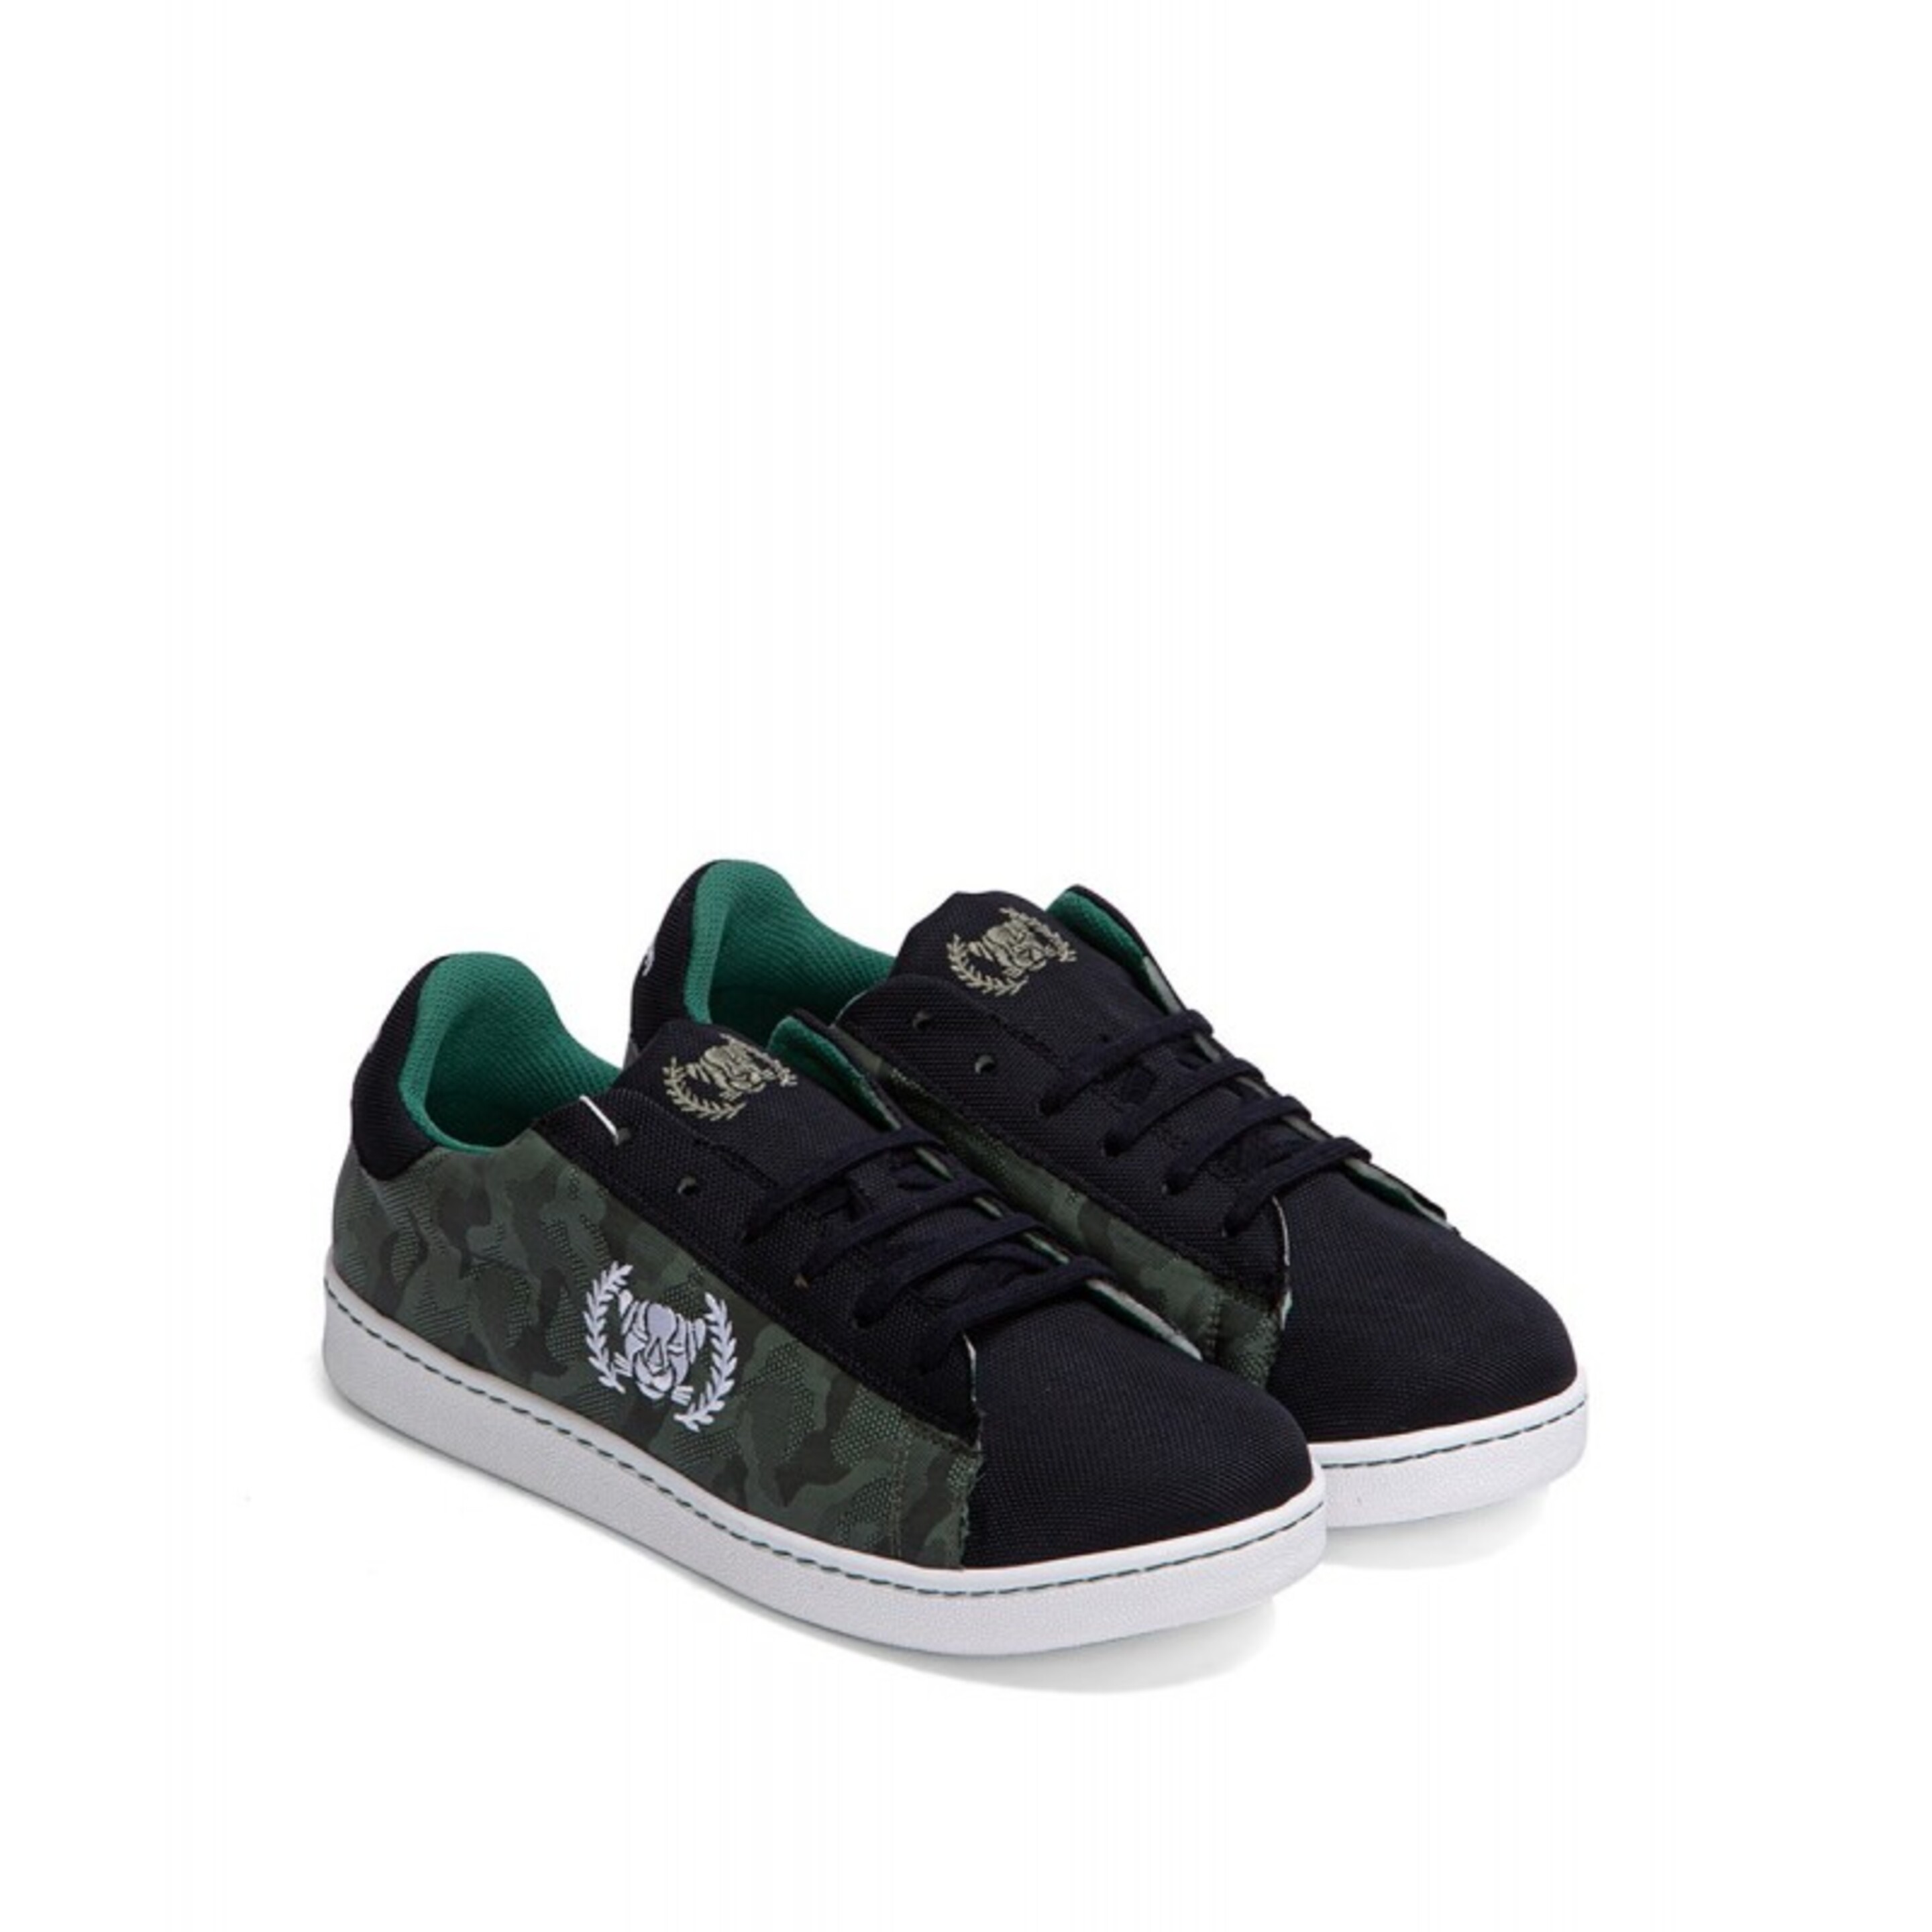 Sneaker Xyon Revolution - verde - 